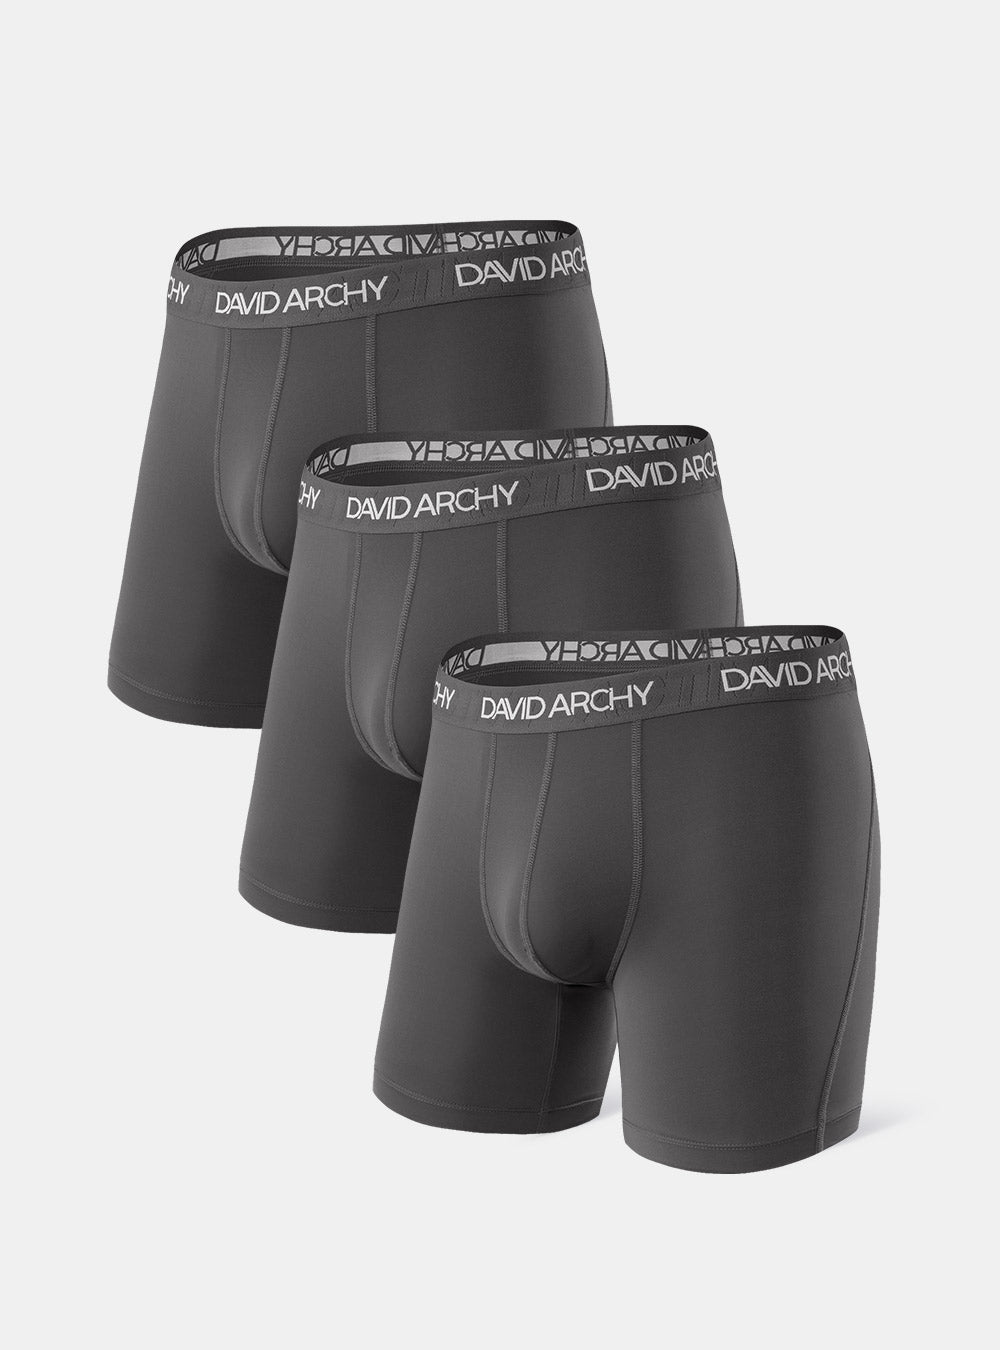 David Archy Underwear DANK08B Men's Rayon Breathable Ultra Soft Comfort  Lightweight Pouch Briefs 